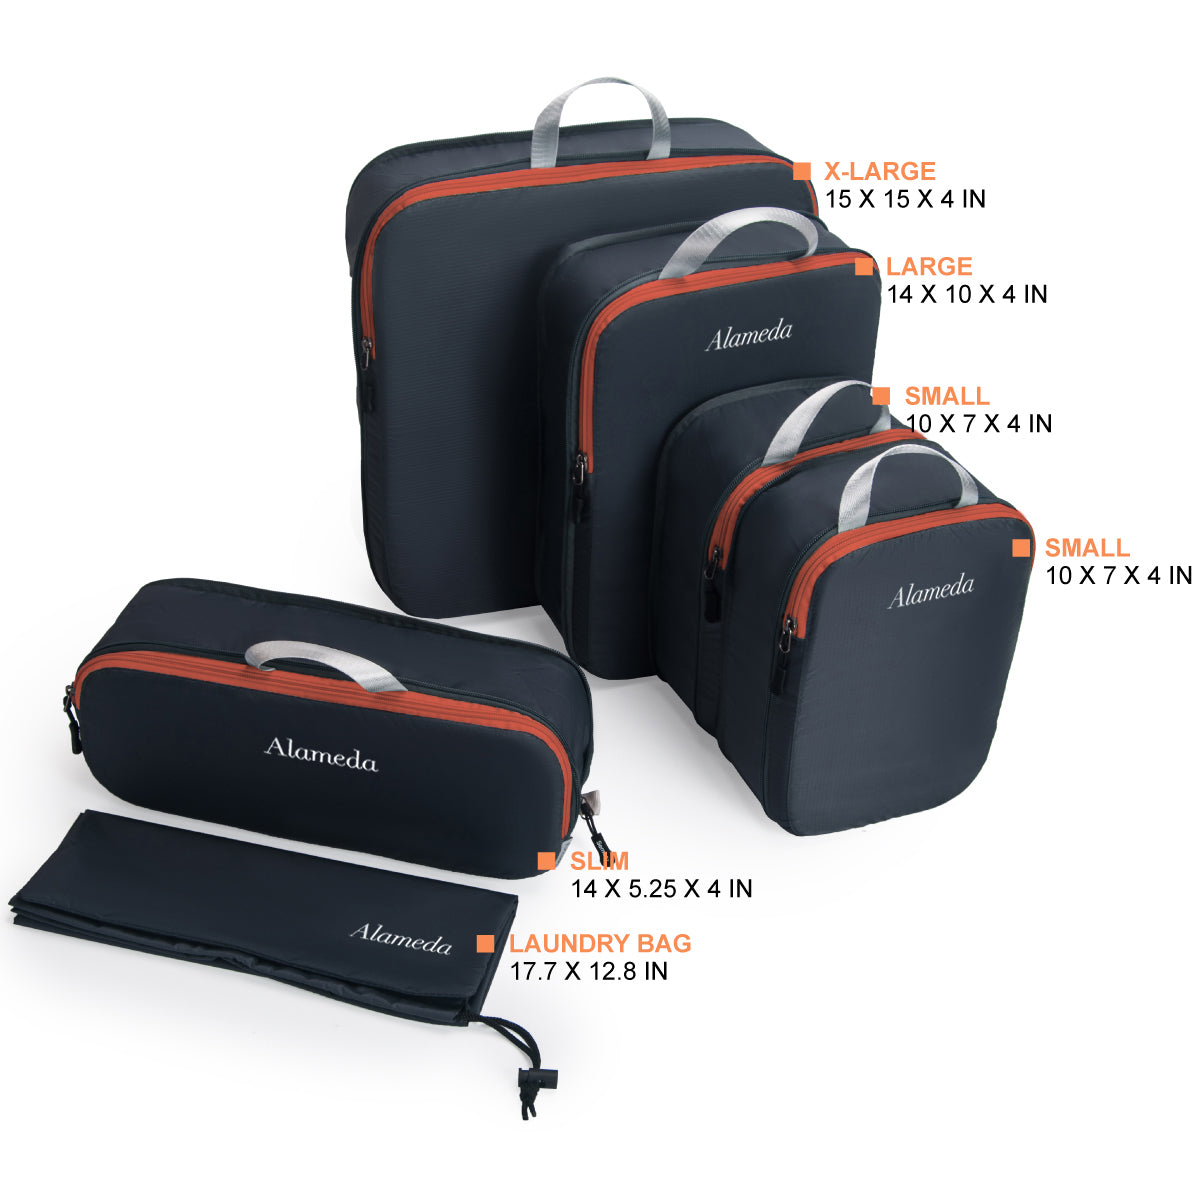 Register your product - Register your travel bag